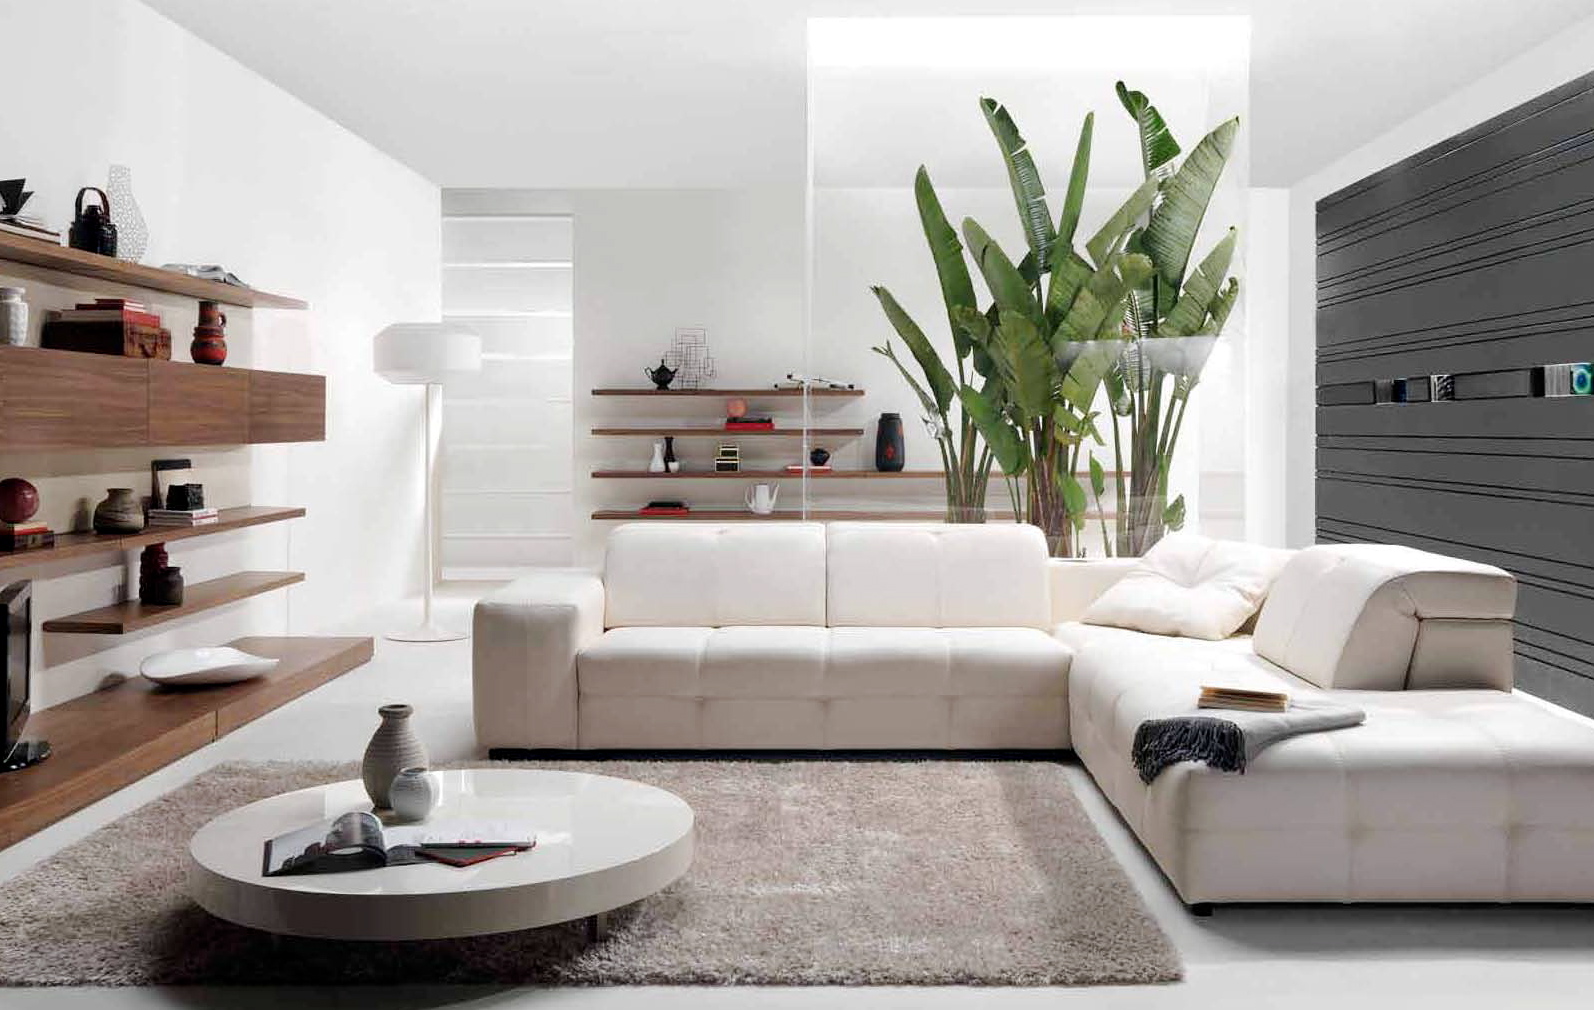 Interior Design Ideas, Interior Designs, Home Design Ideas: New Home Interior Design Ideas